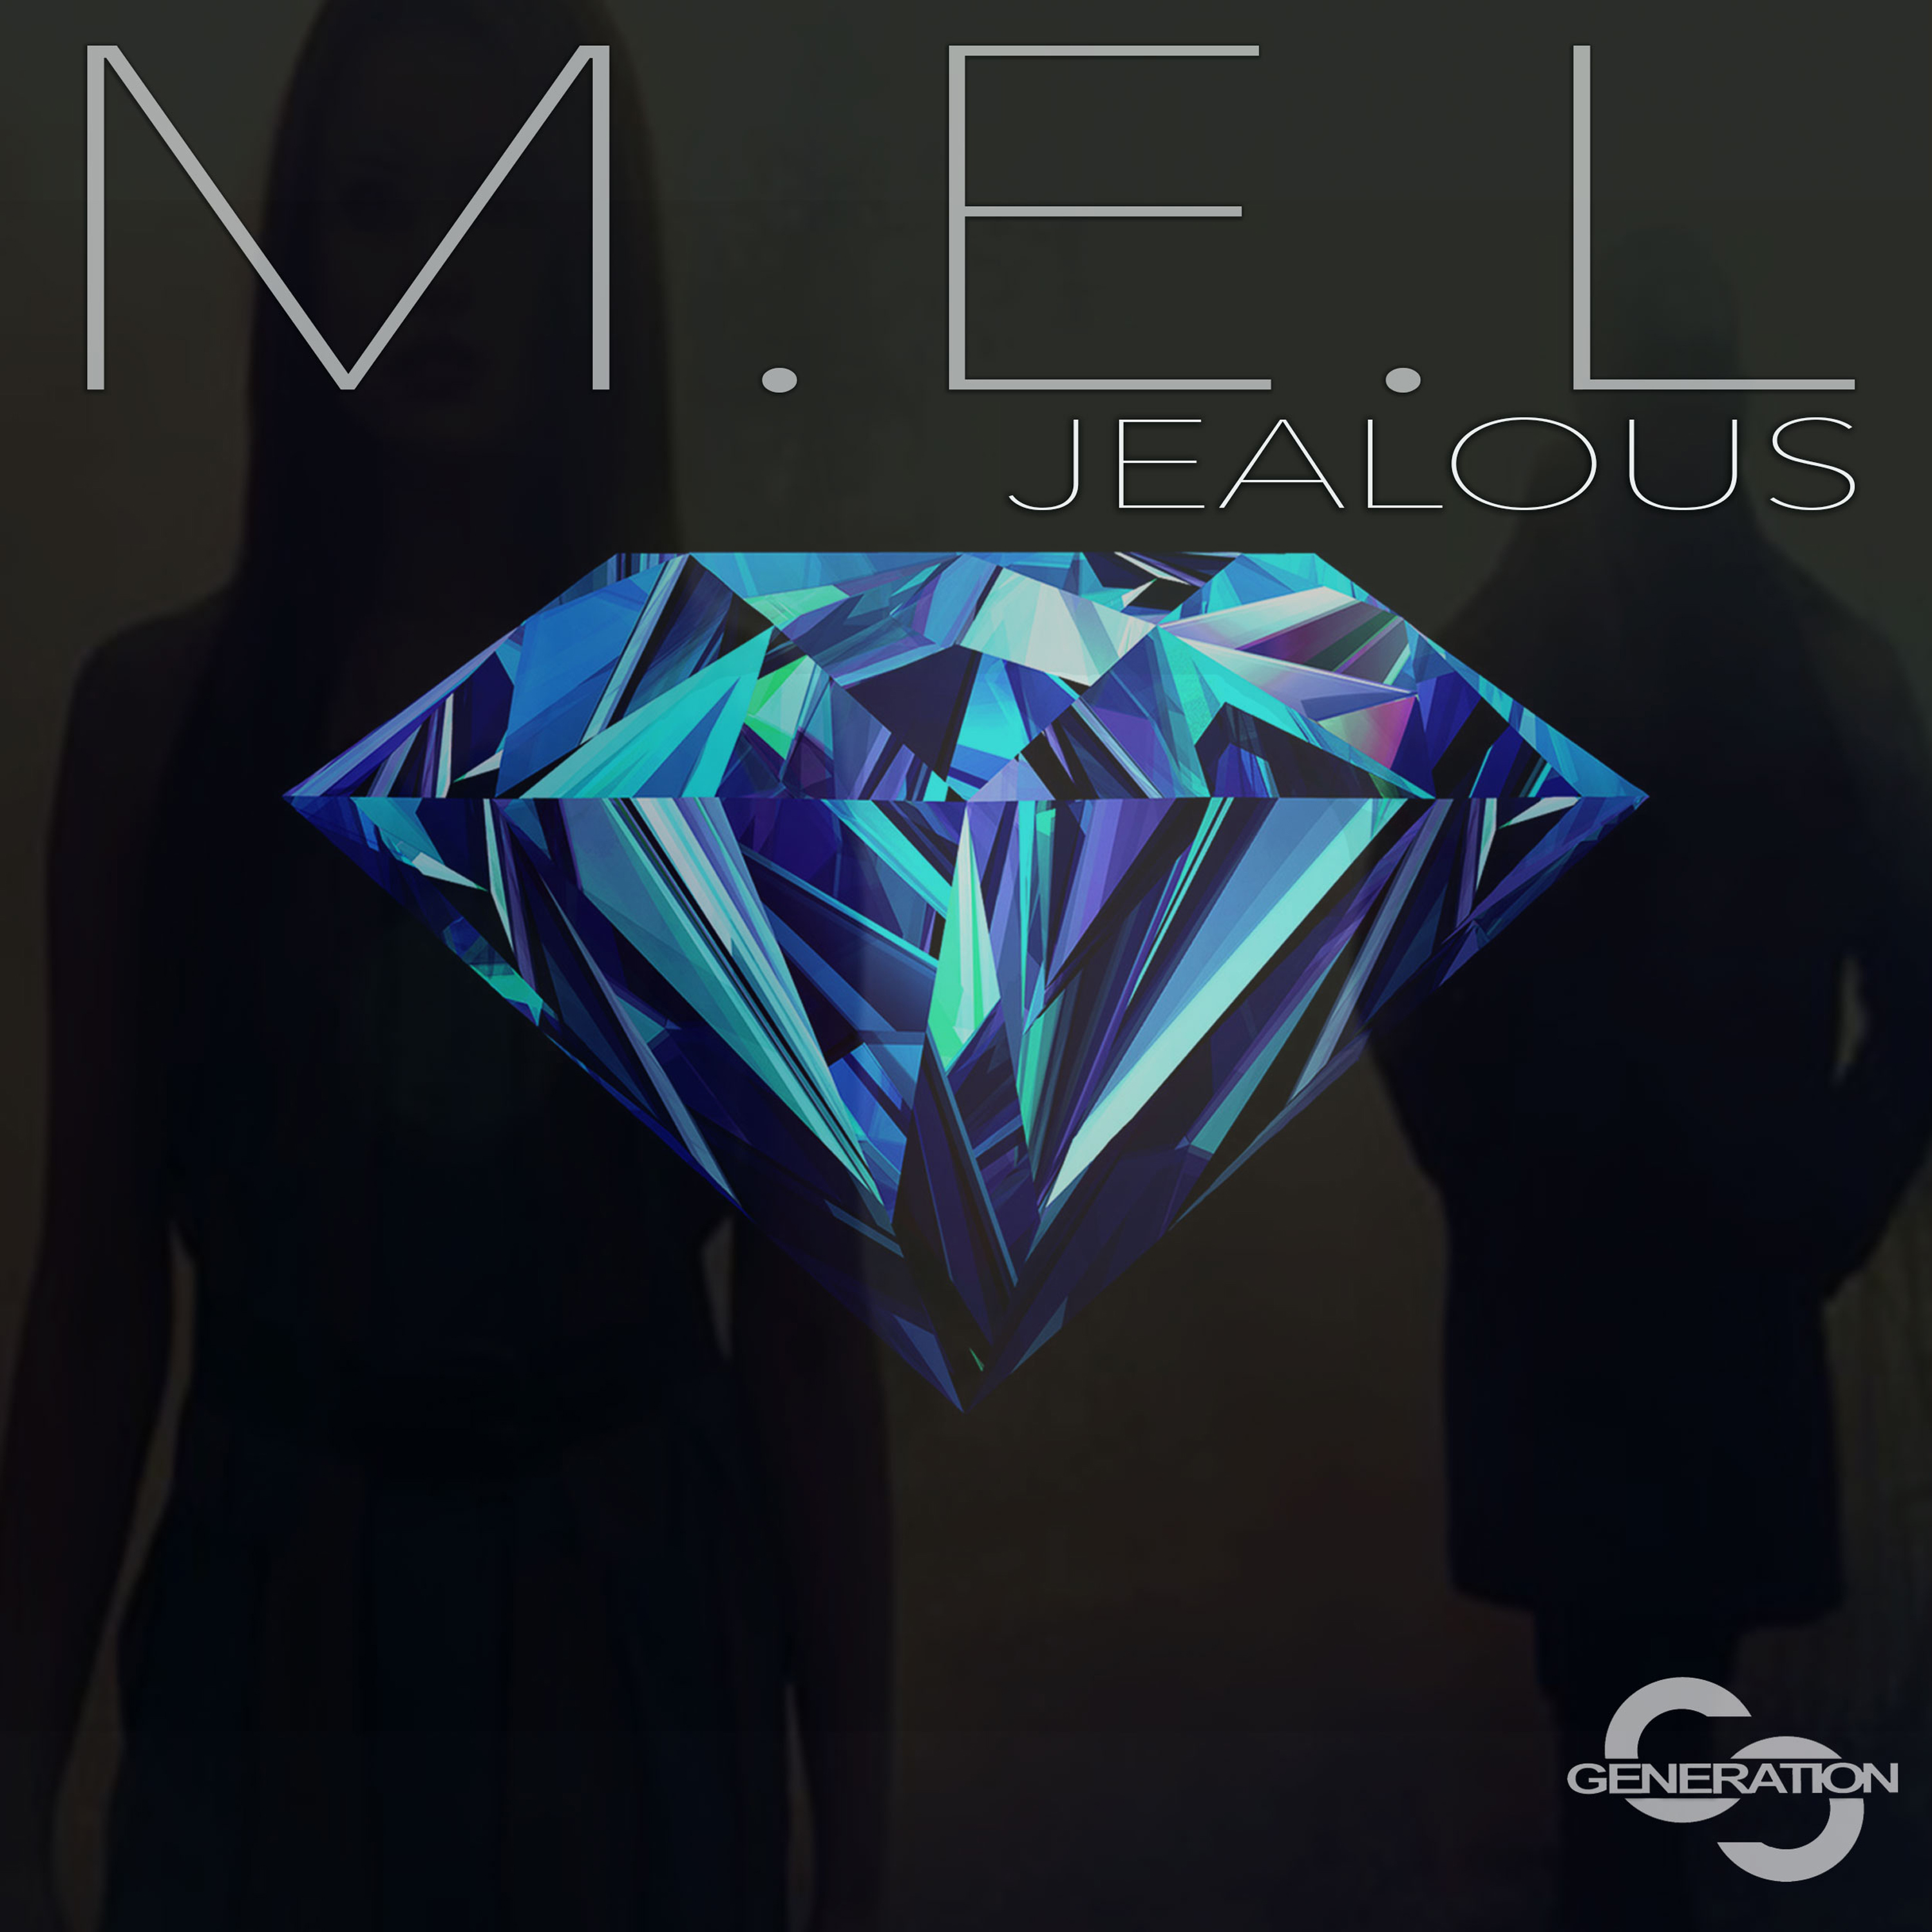 Jealous (Mike Cruz Remix)